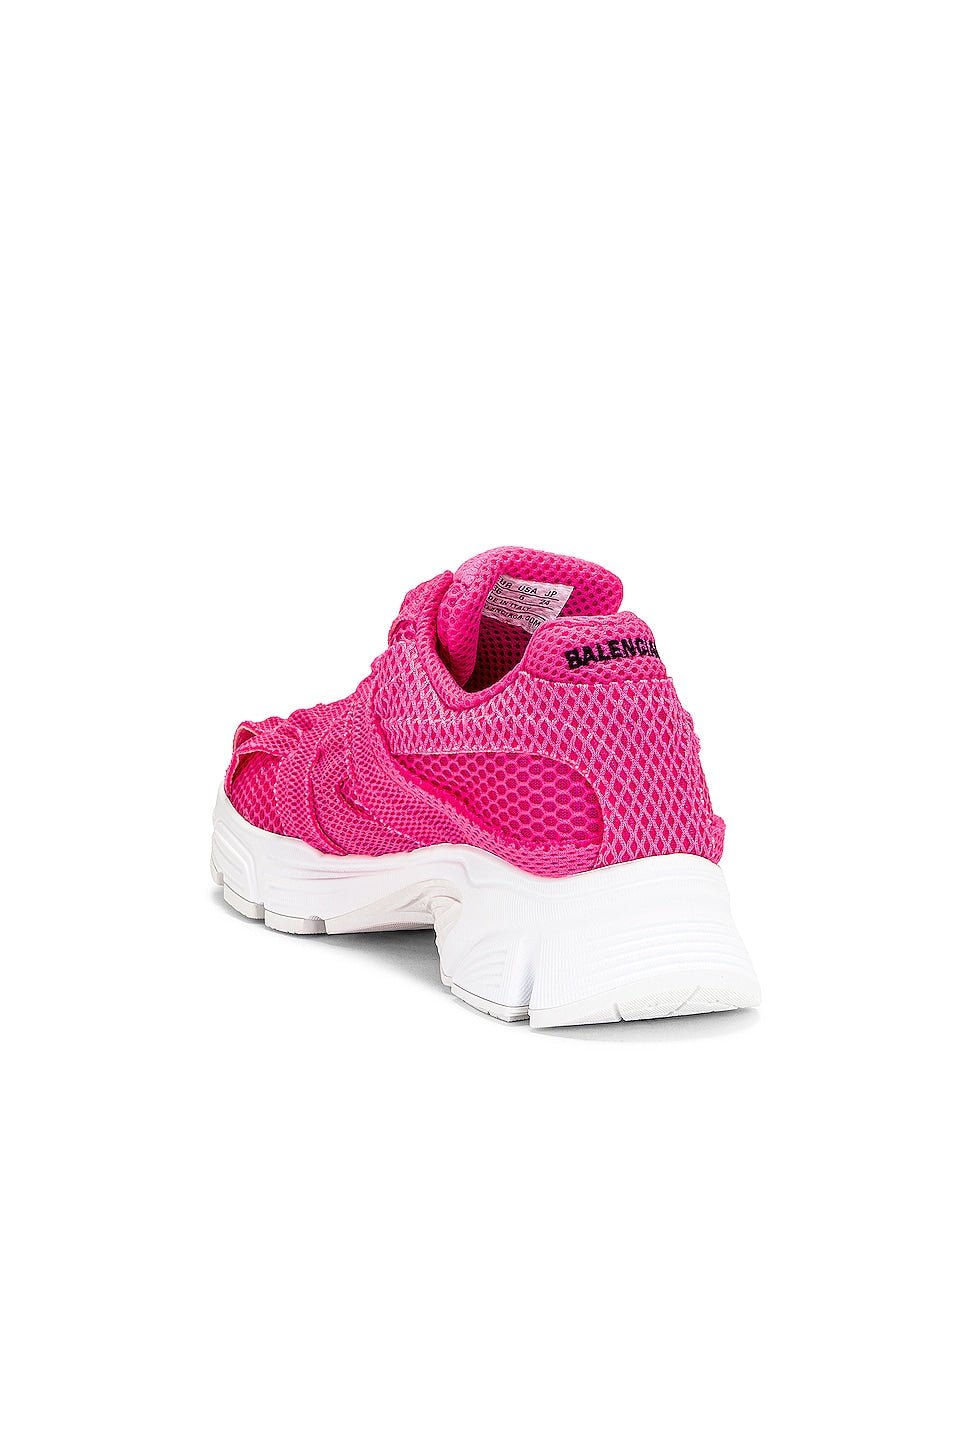 Balenciaga Women's Phantom Sneaker in Pink Fluo & White SIZE 41